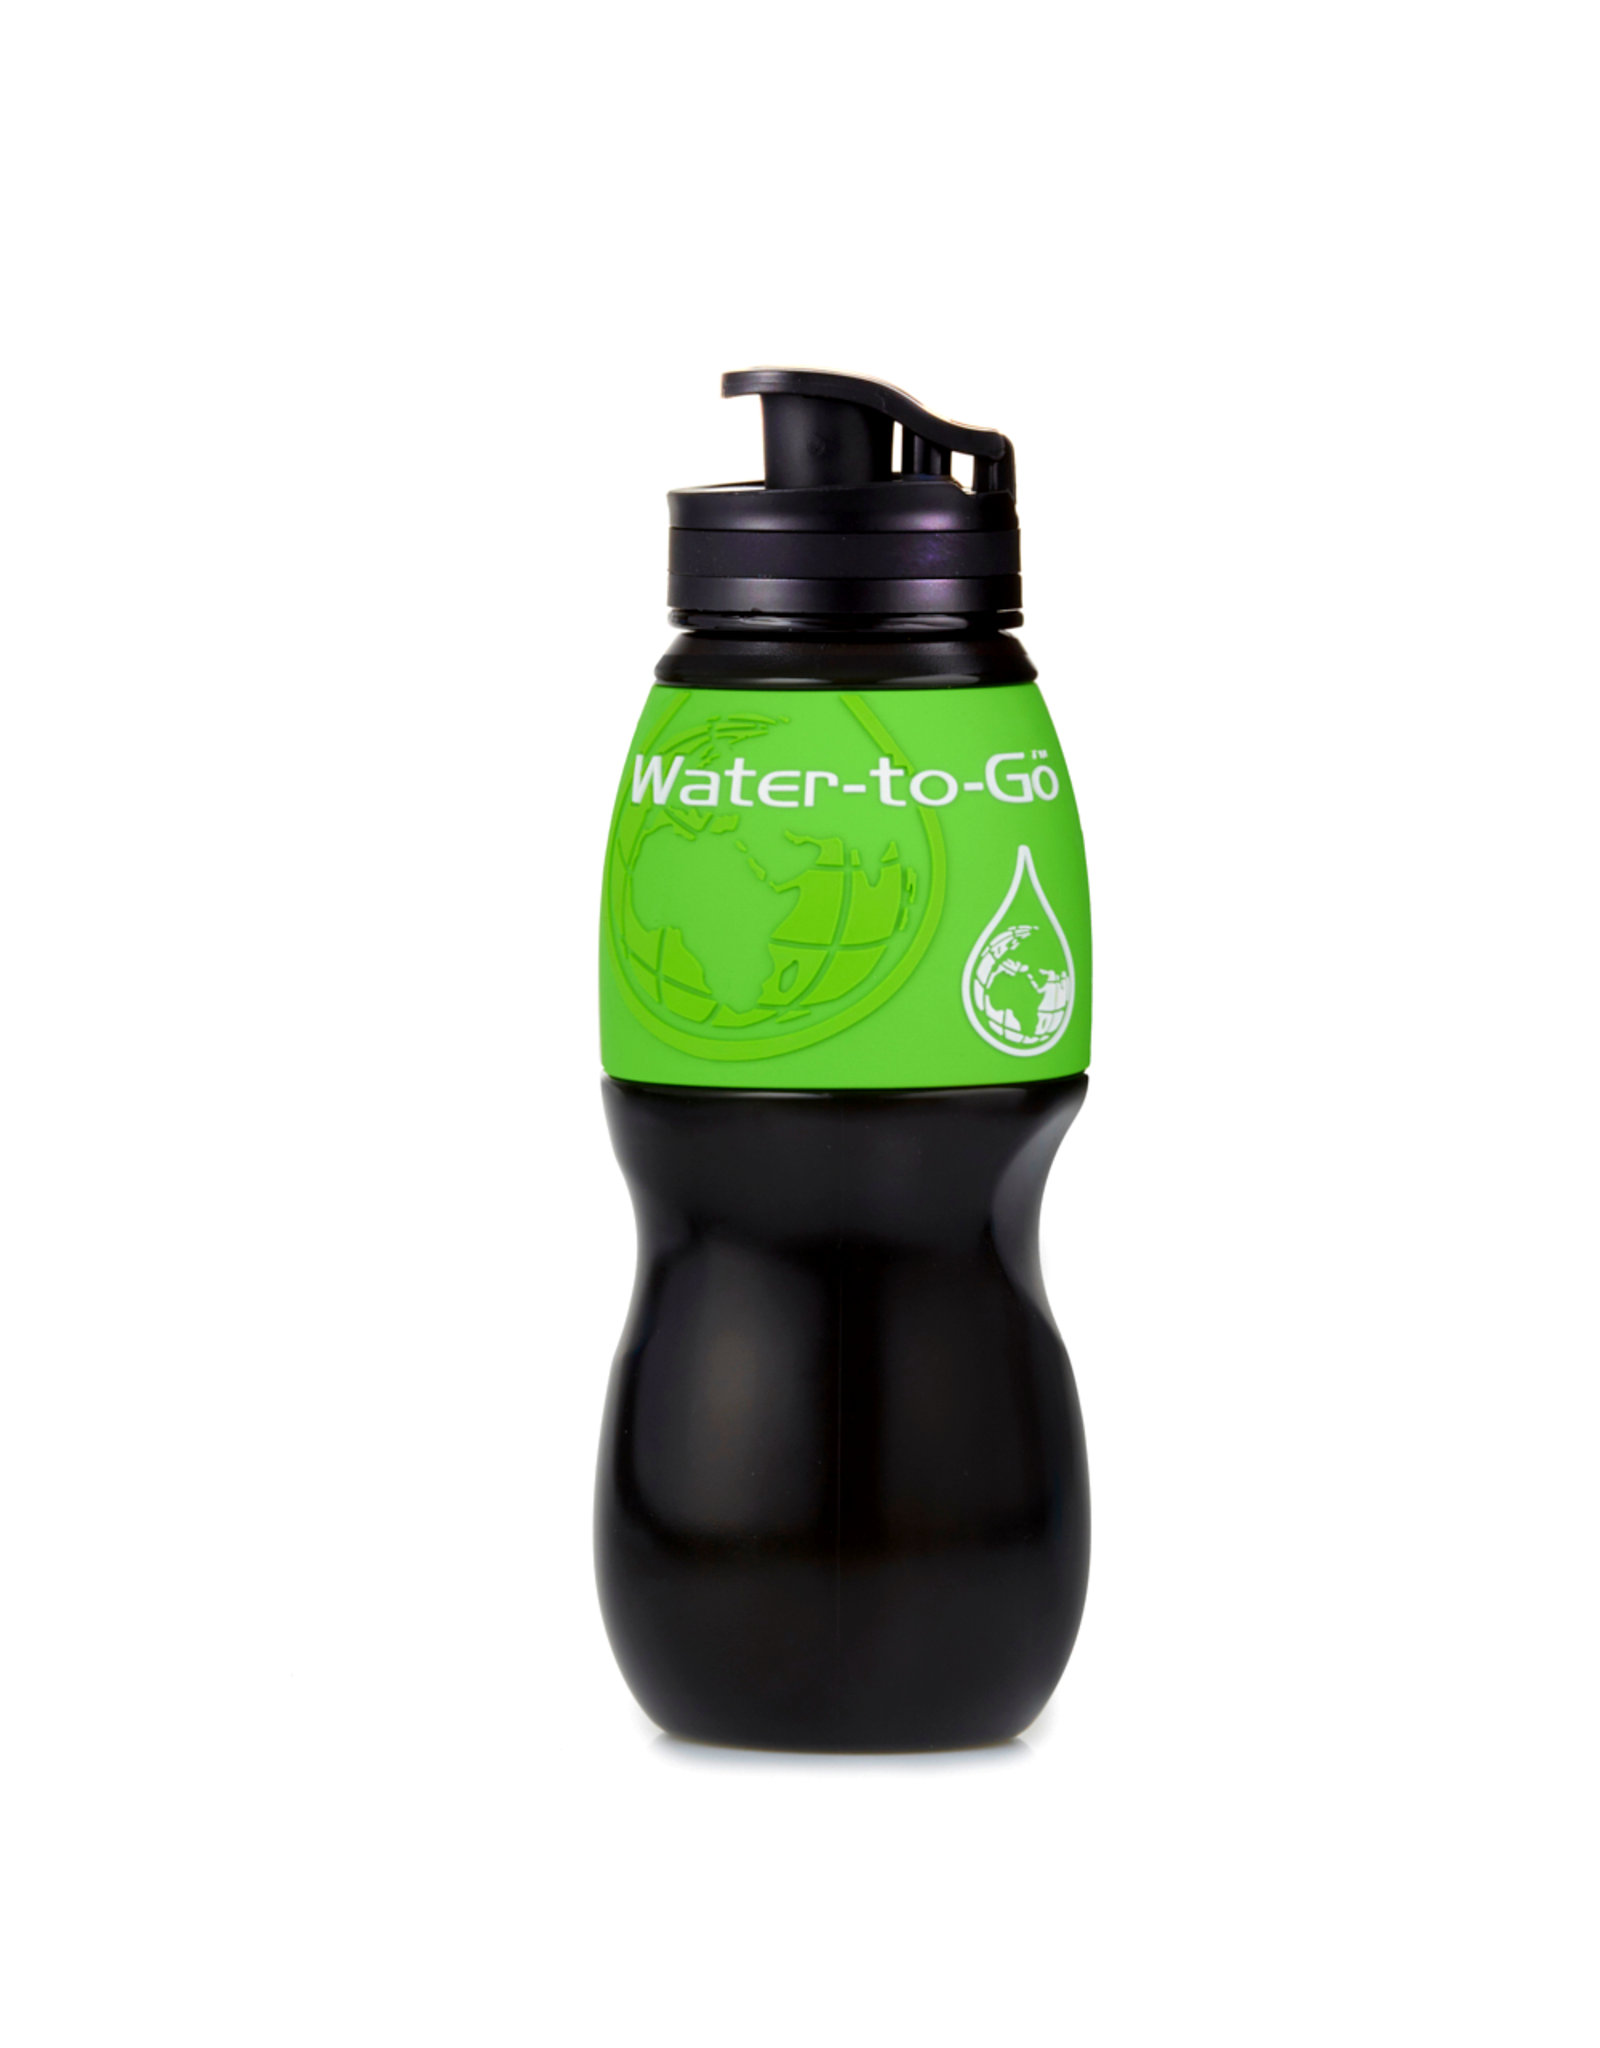 Nvt WatertoGo Drinkfles Waterfles met Filter - 75cl – Groen – BPA Vrij